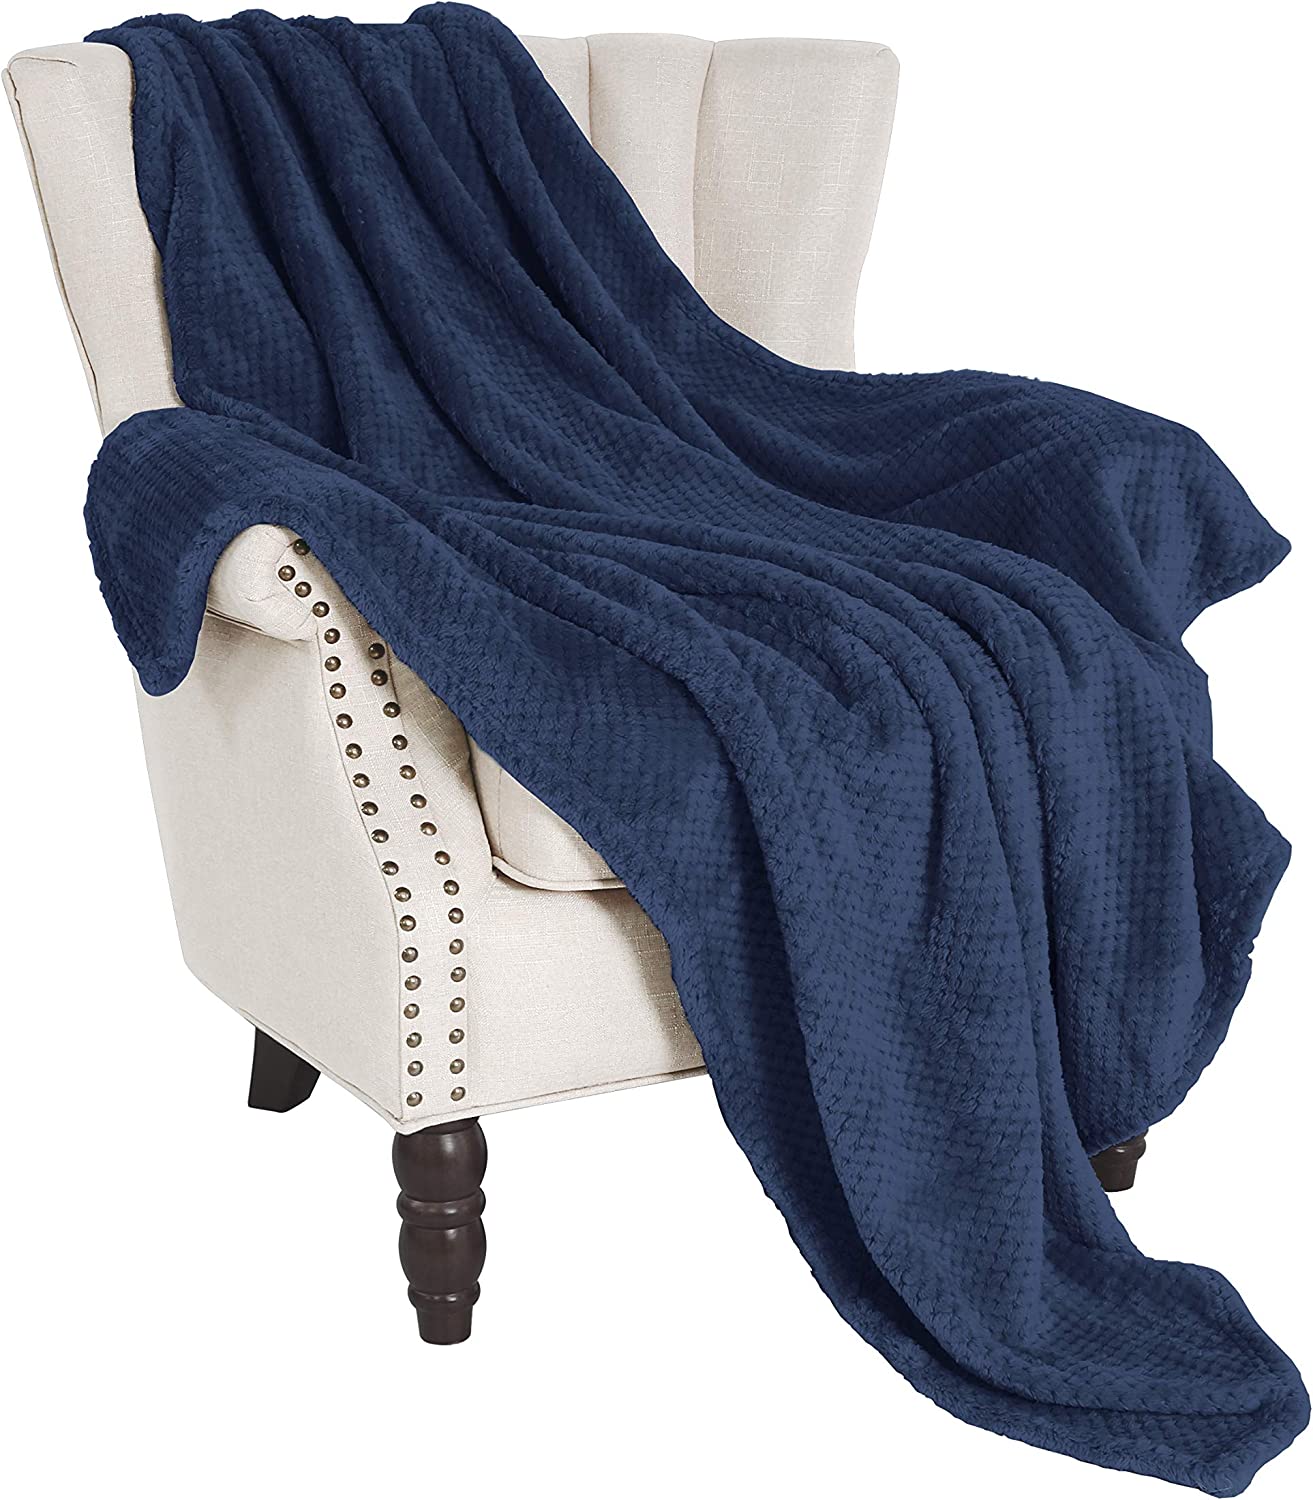 Ultra Soft Reversable Braided Textured Jacquard Oversized Throw Blanket $19.99 (reg $35)